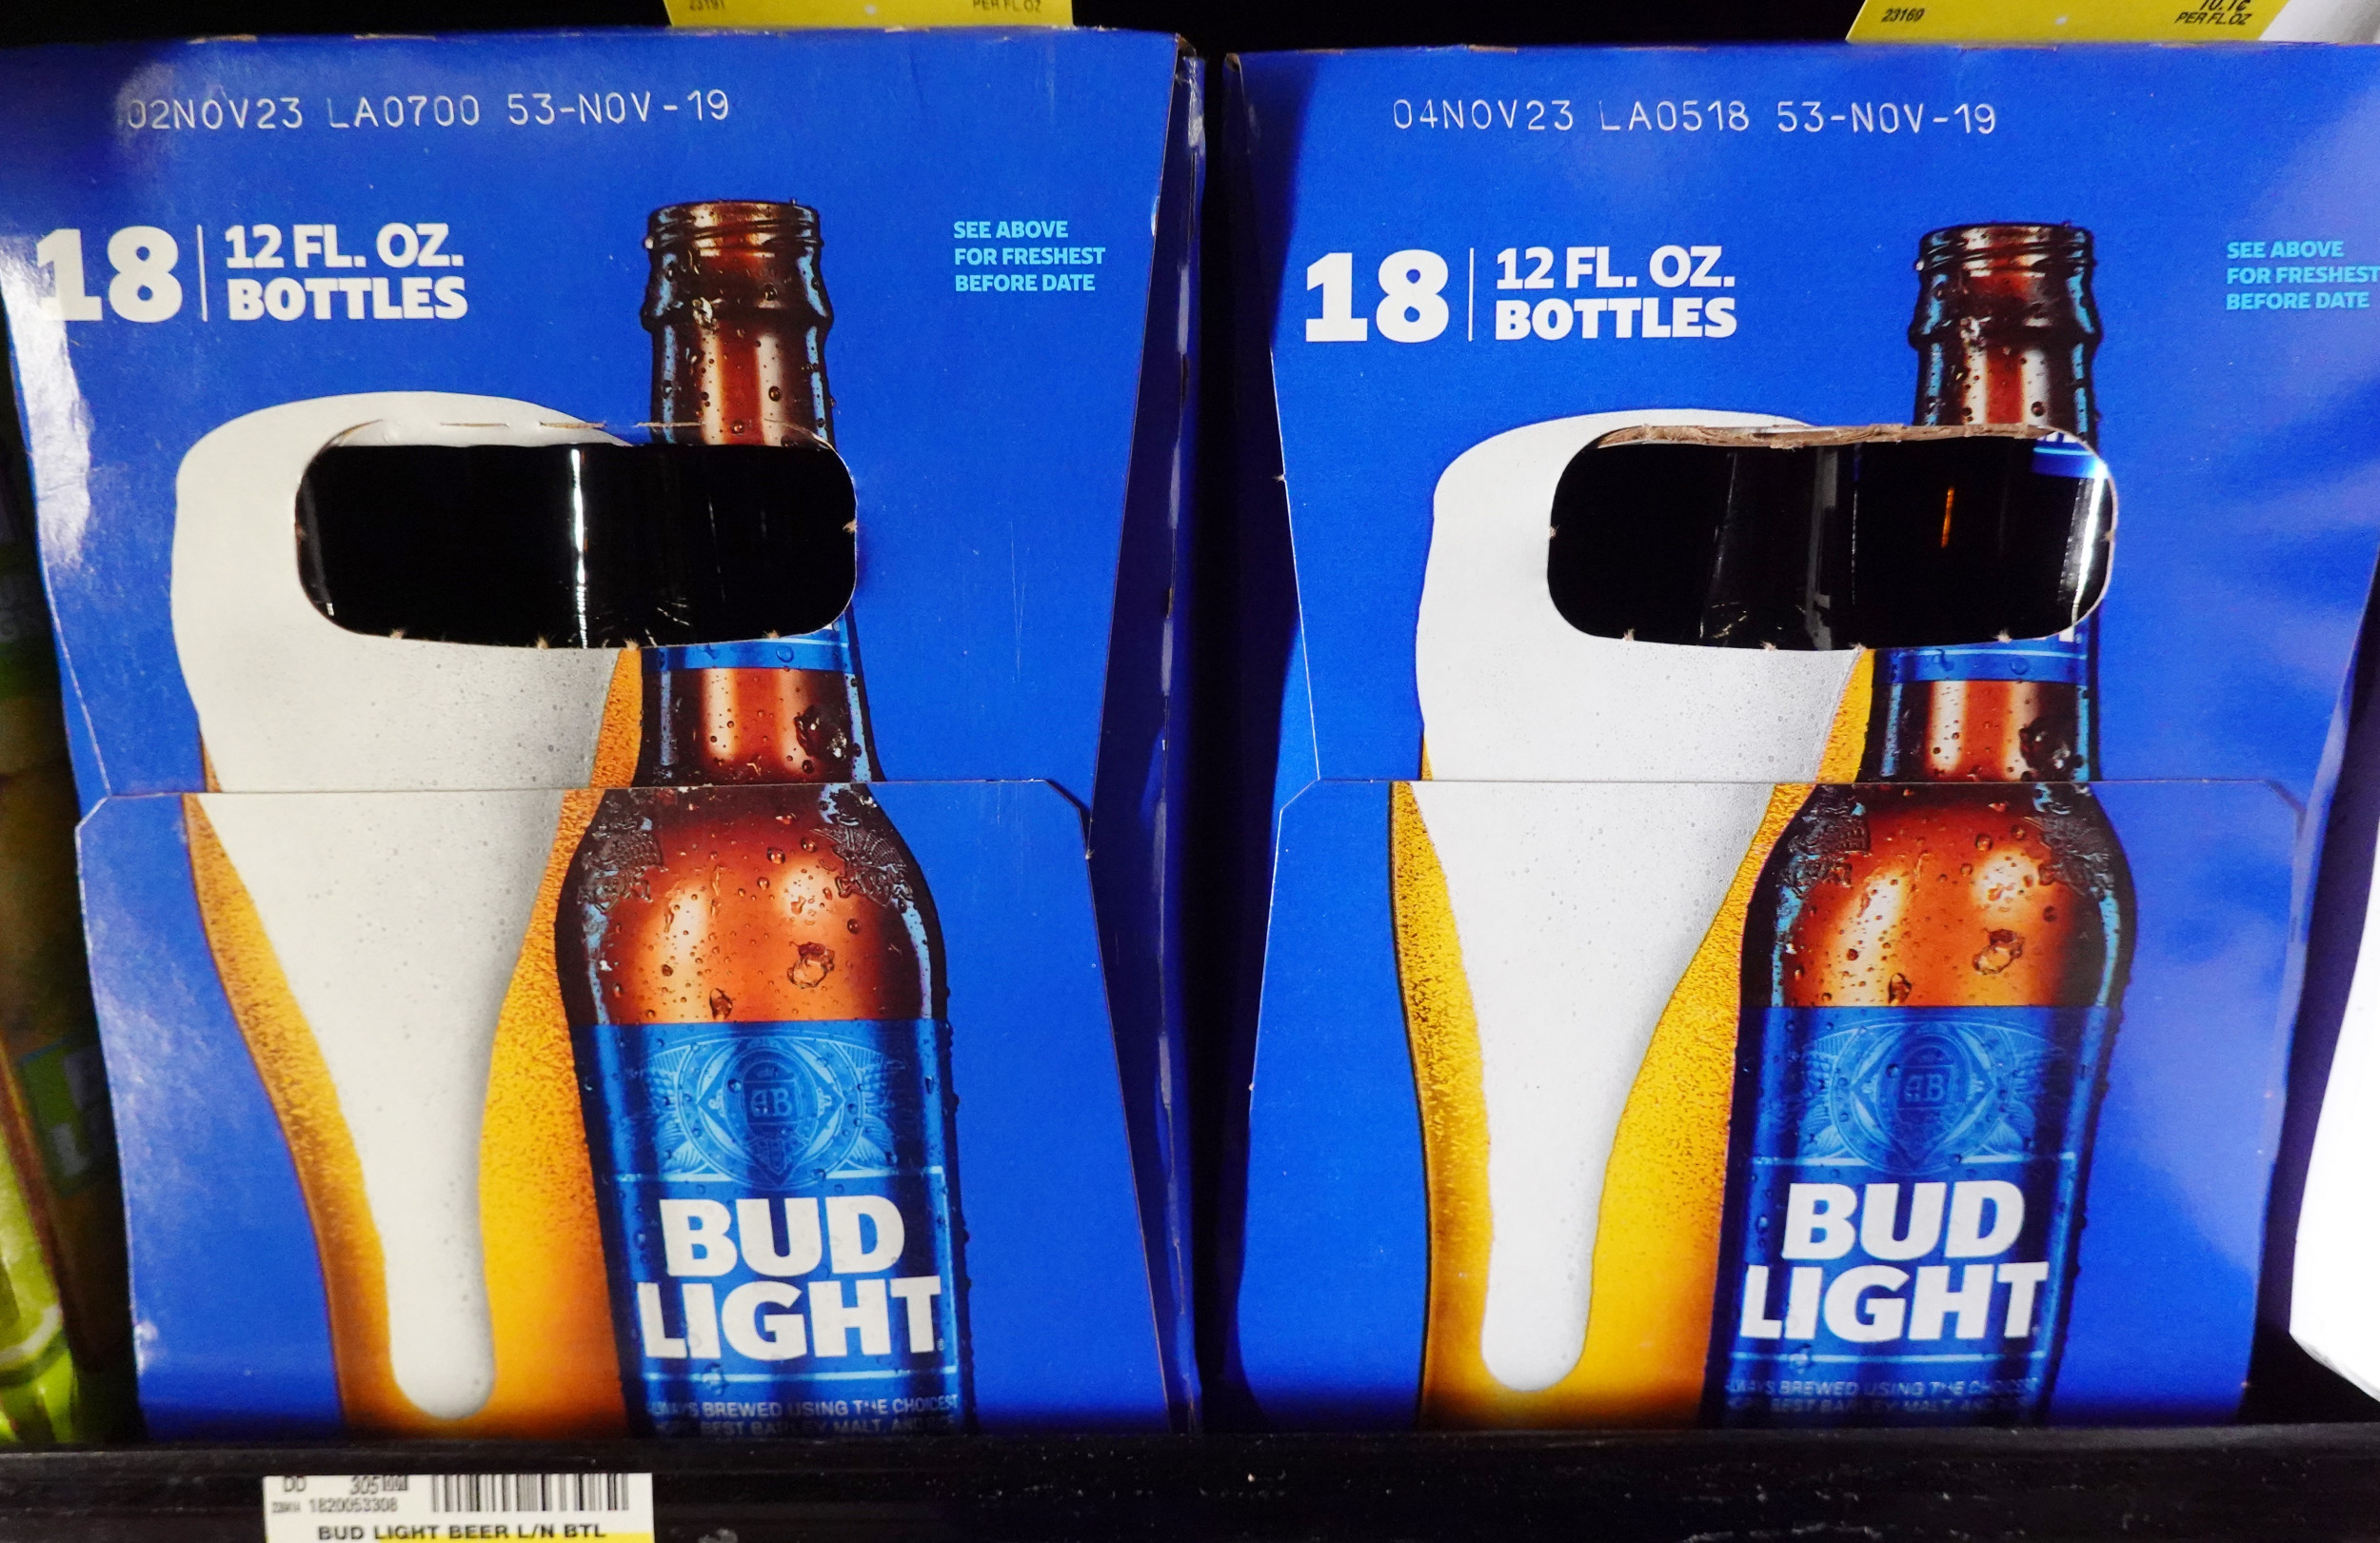 The boycott against Bud Light is hammering sales. Experts explain